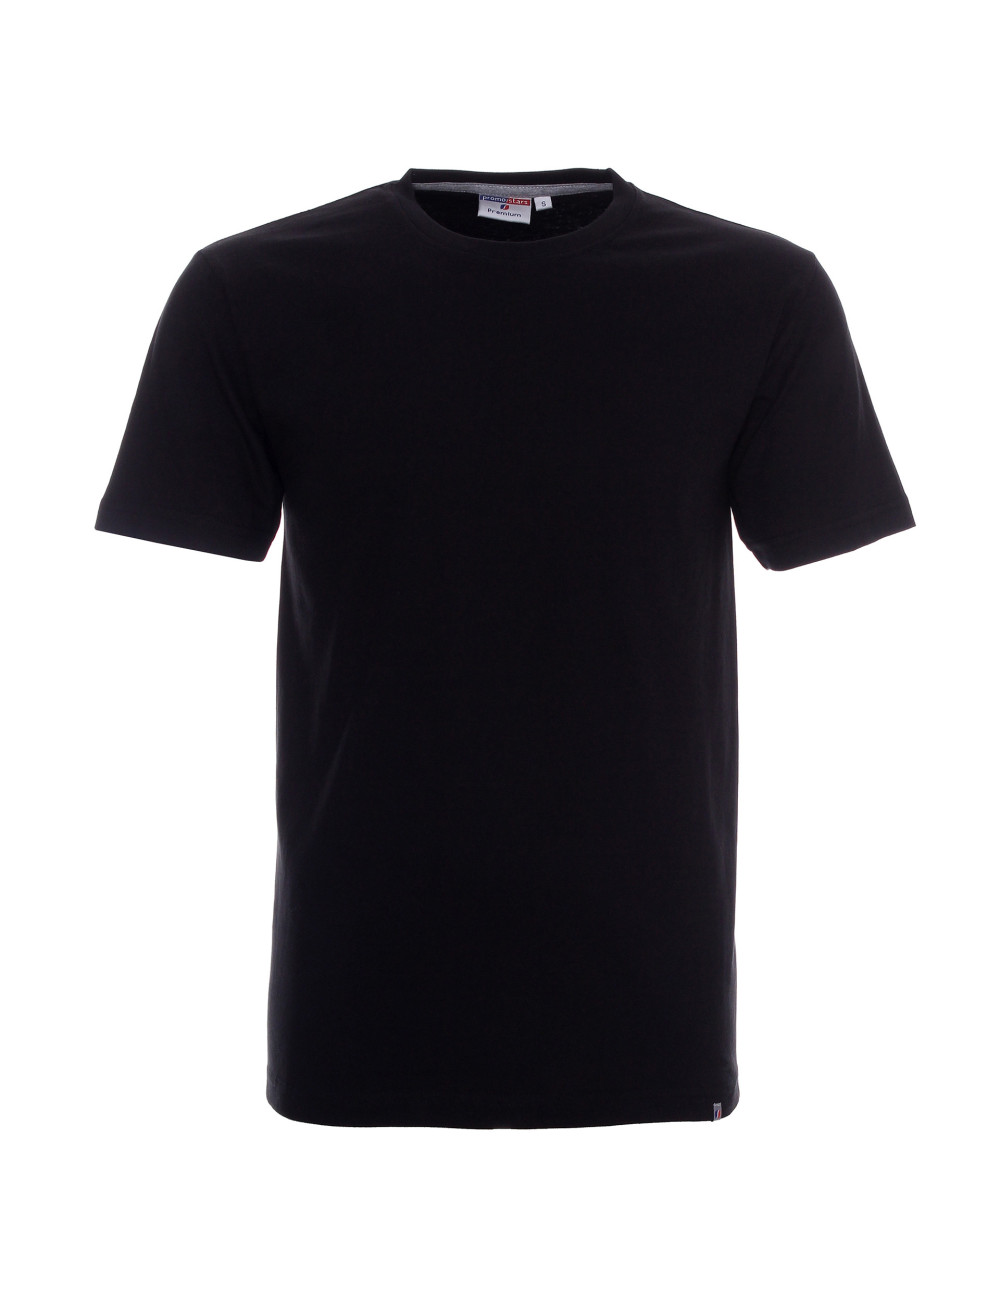 Premium men`s t-shirt black Promostars